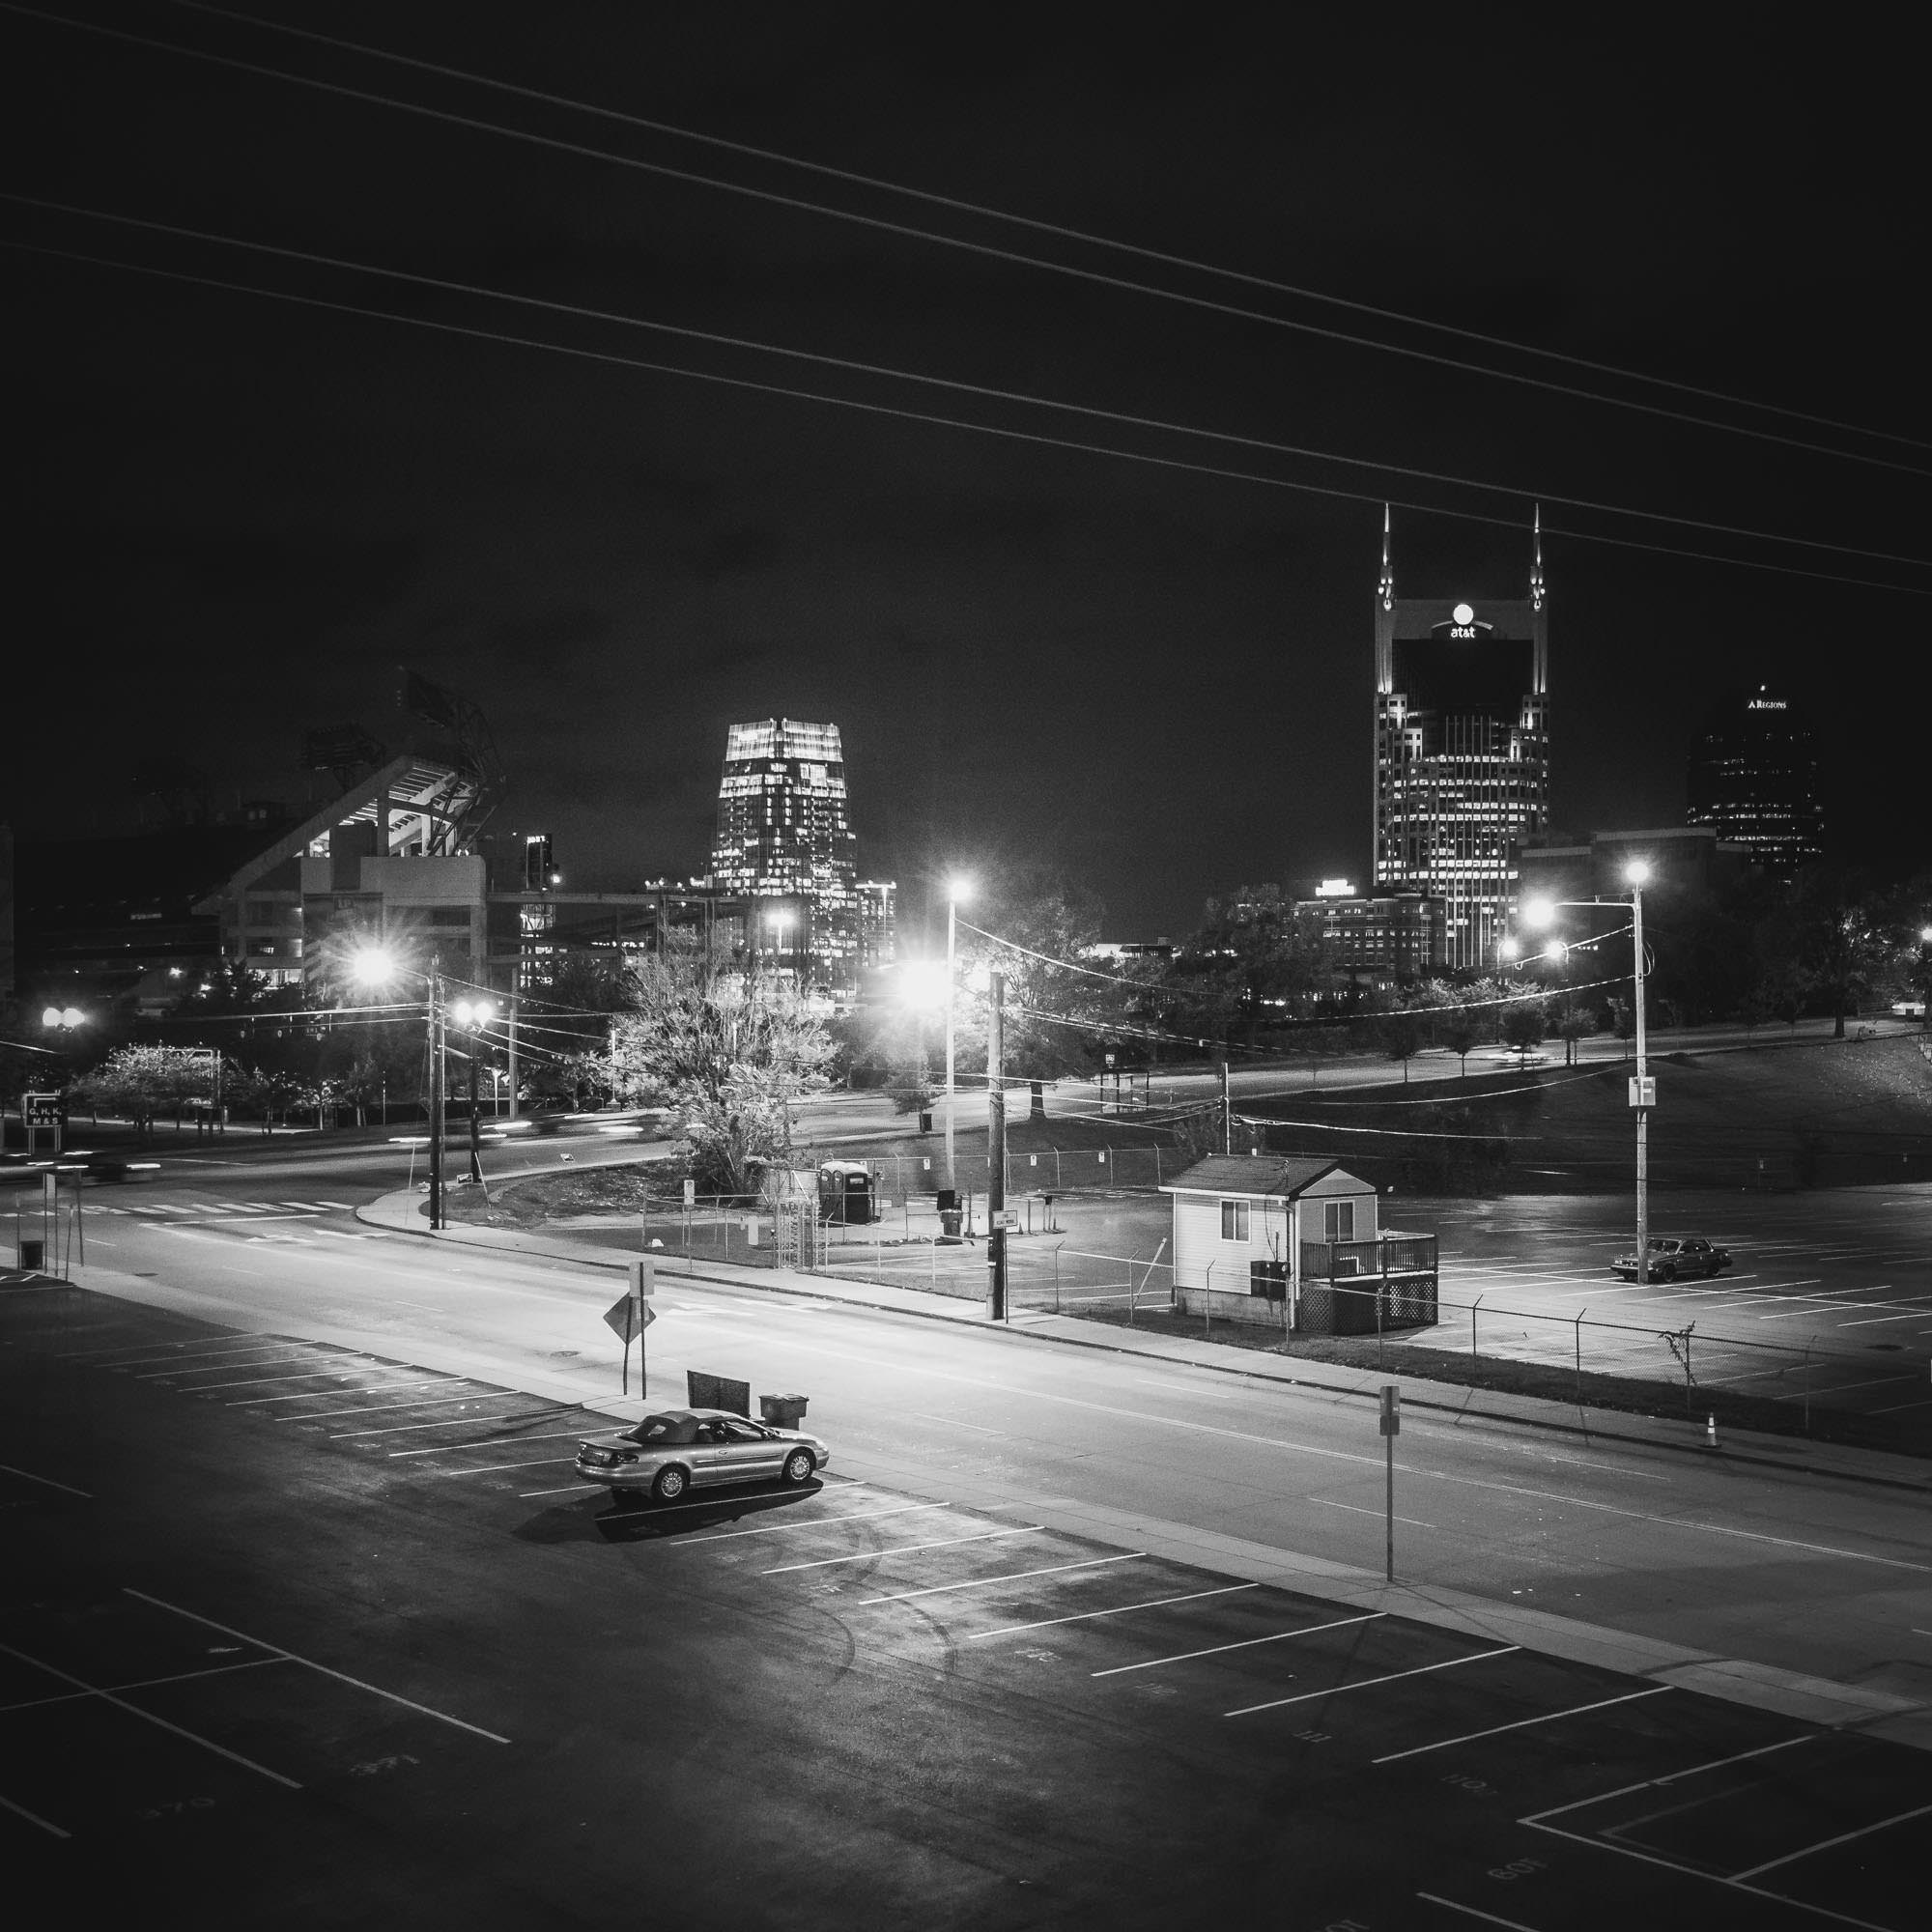 Parking Lot - Nashville Tennessee